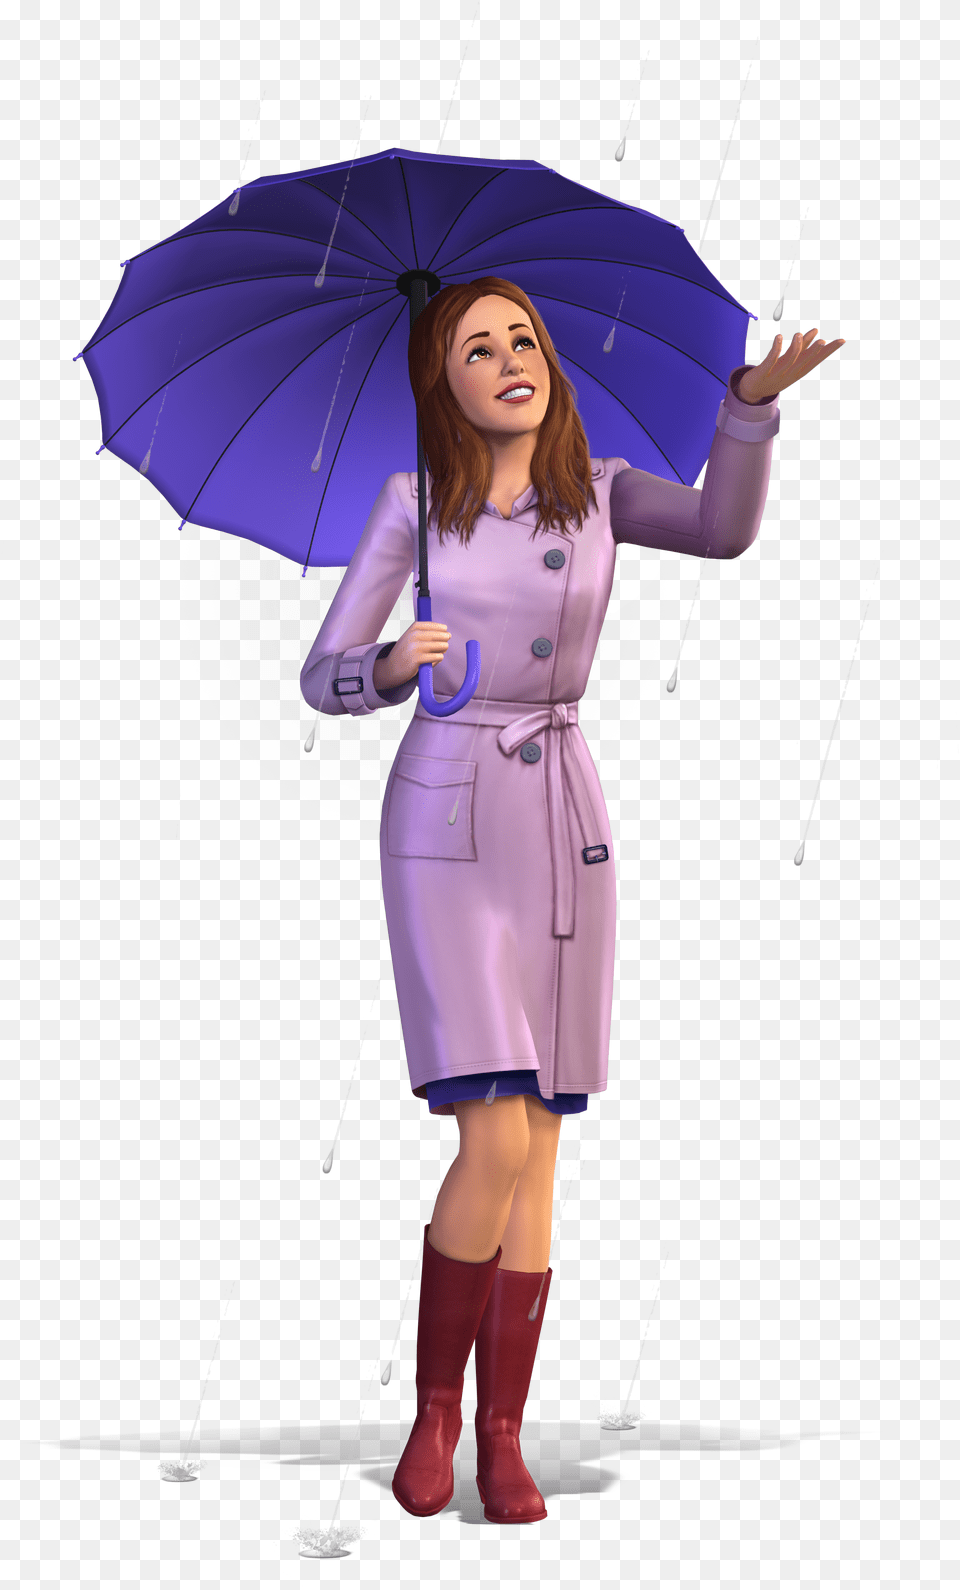 The Umbrella Sims 4 Seasons, Chart, Plot, Text Free Png Download